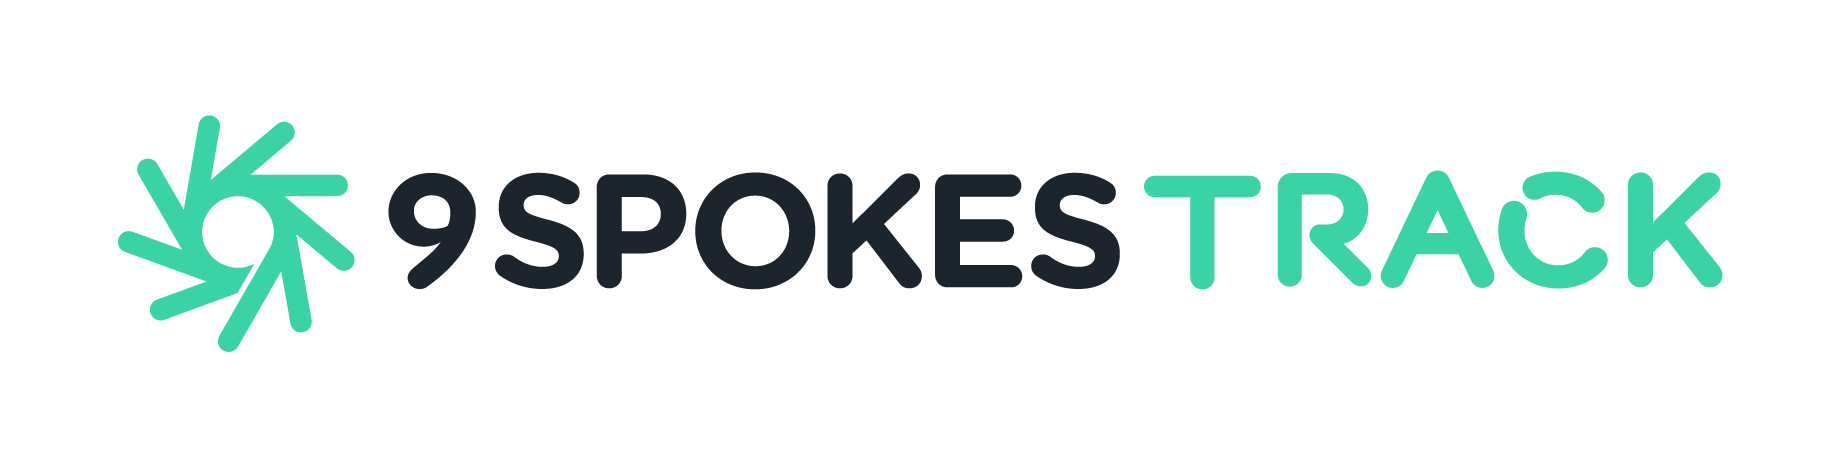 9Spokes Track logo